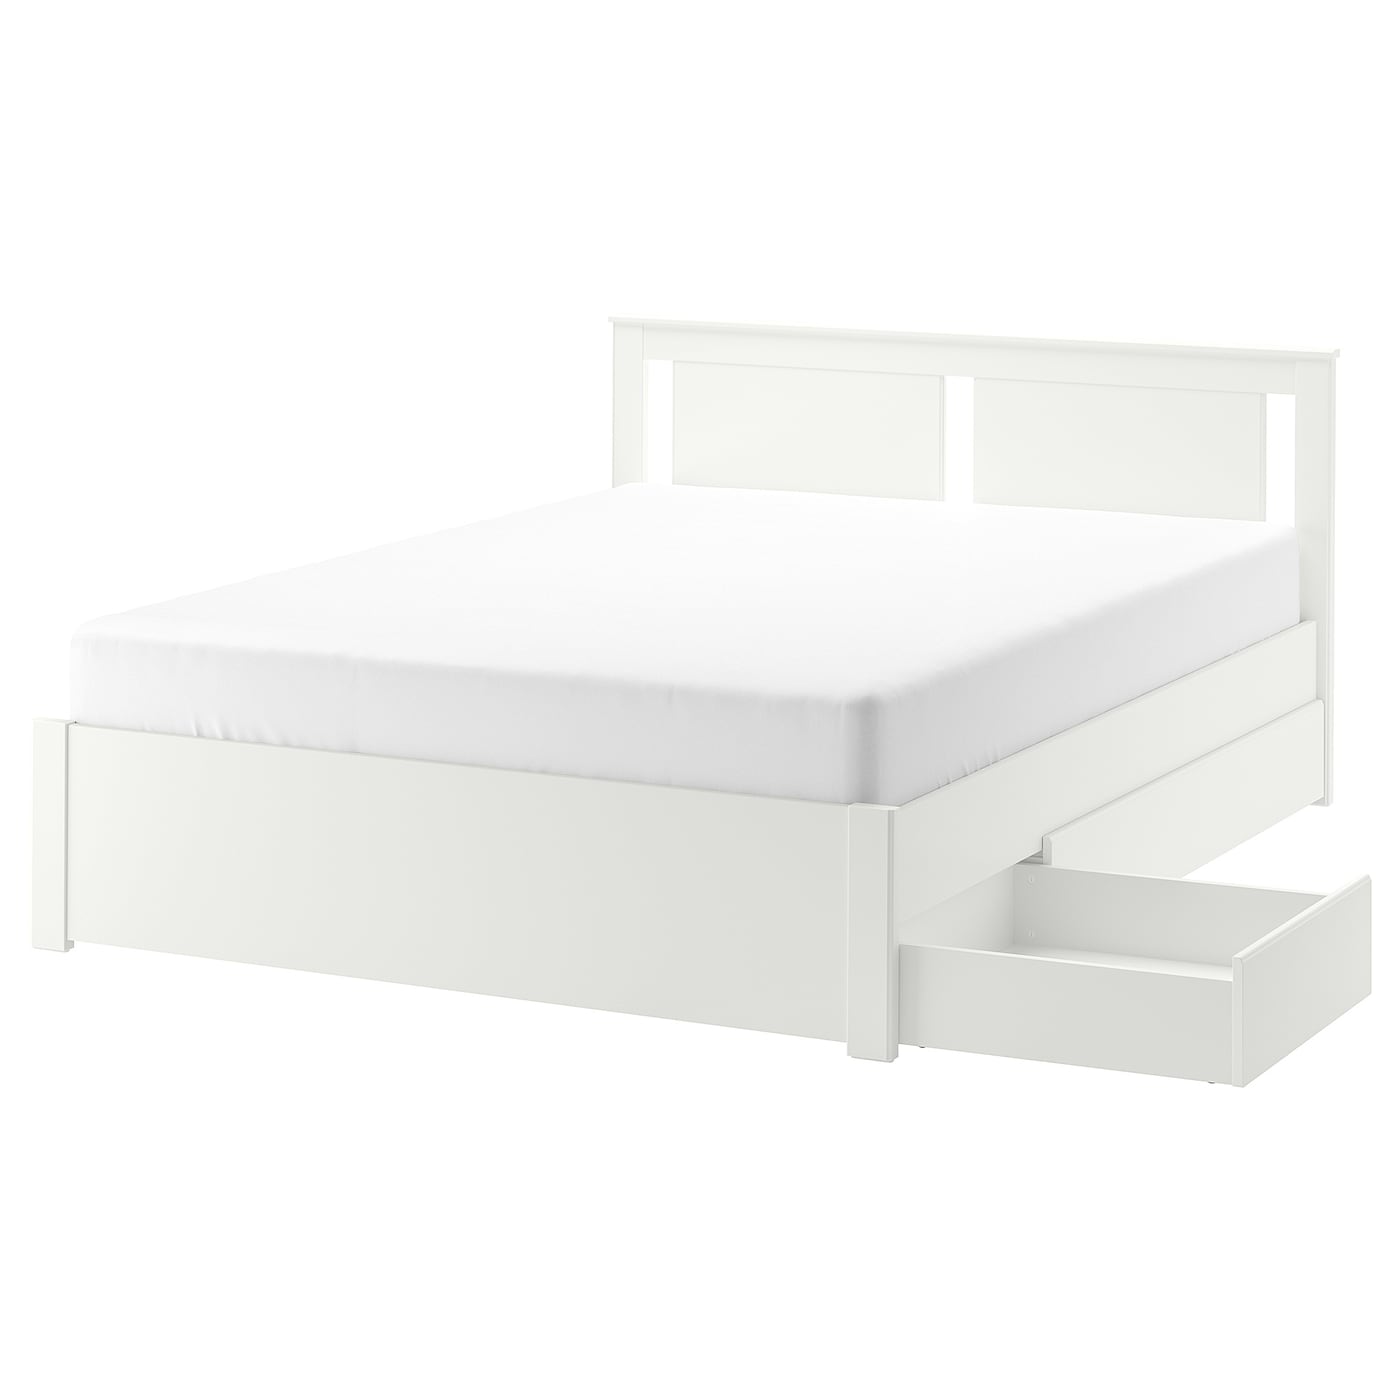 Каркас кровати с 4 ящиками для хранения - IKEA SONGESAND/LÖNSET/LONSET, 200х160 см, белый, СОНГЕСАНД/ЛОНСЕТ ИКЕА